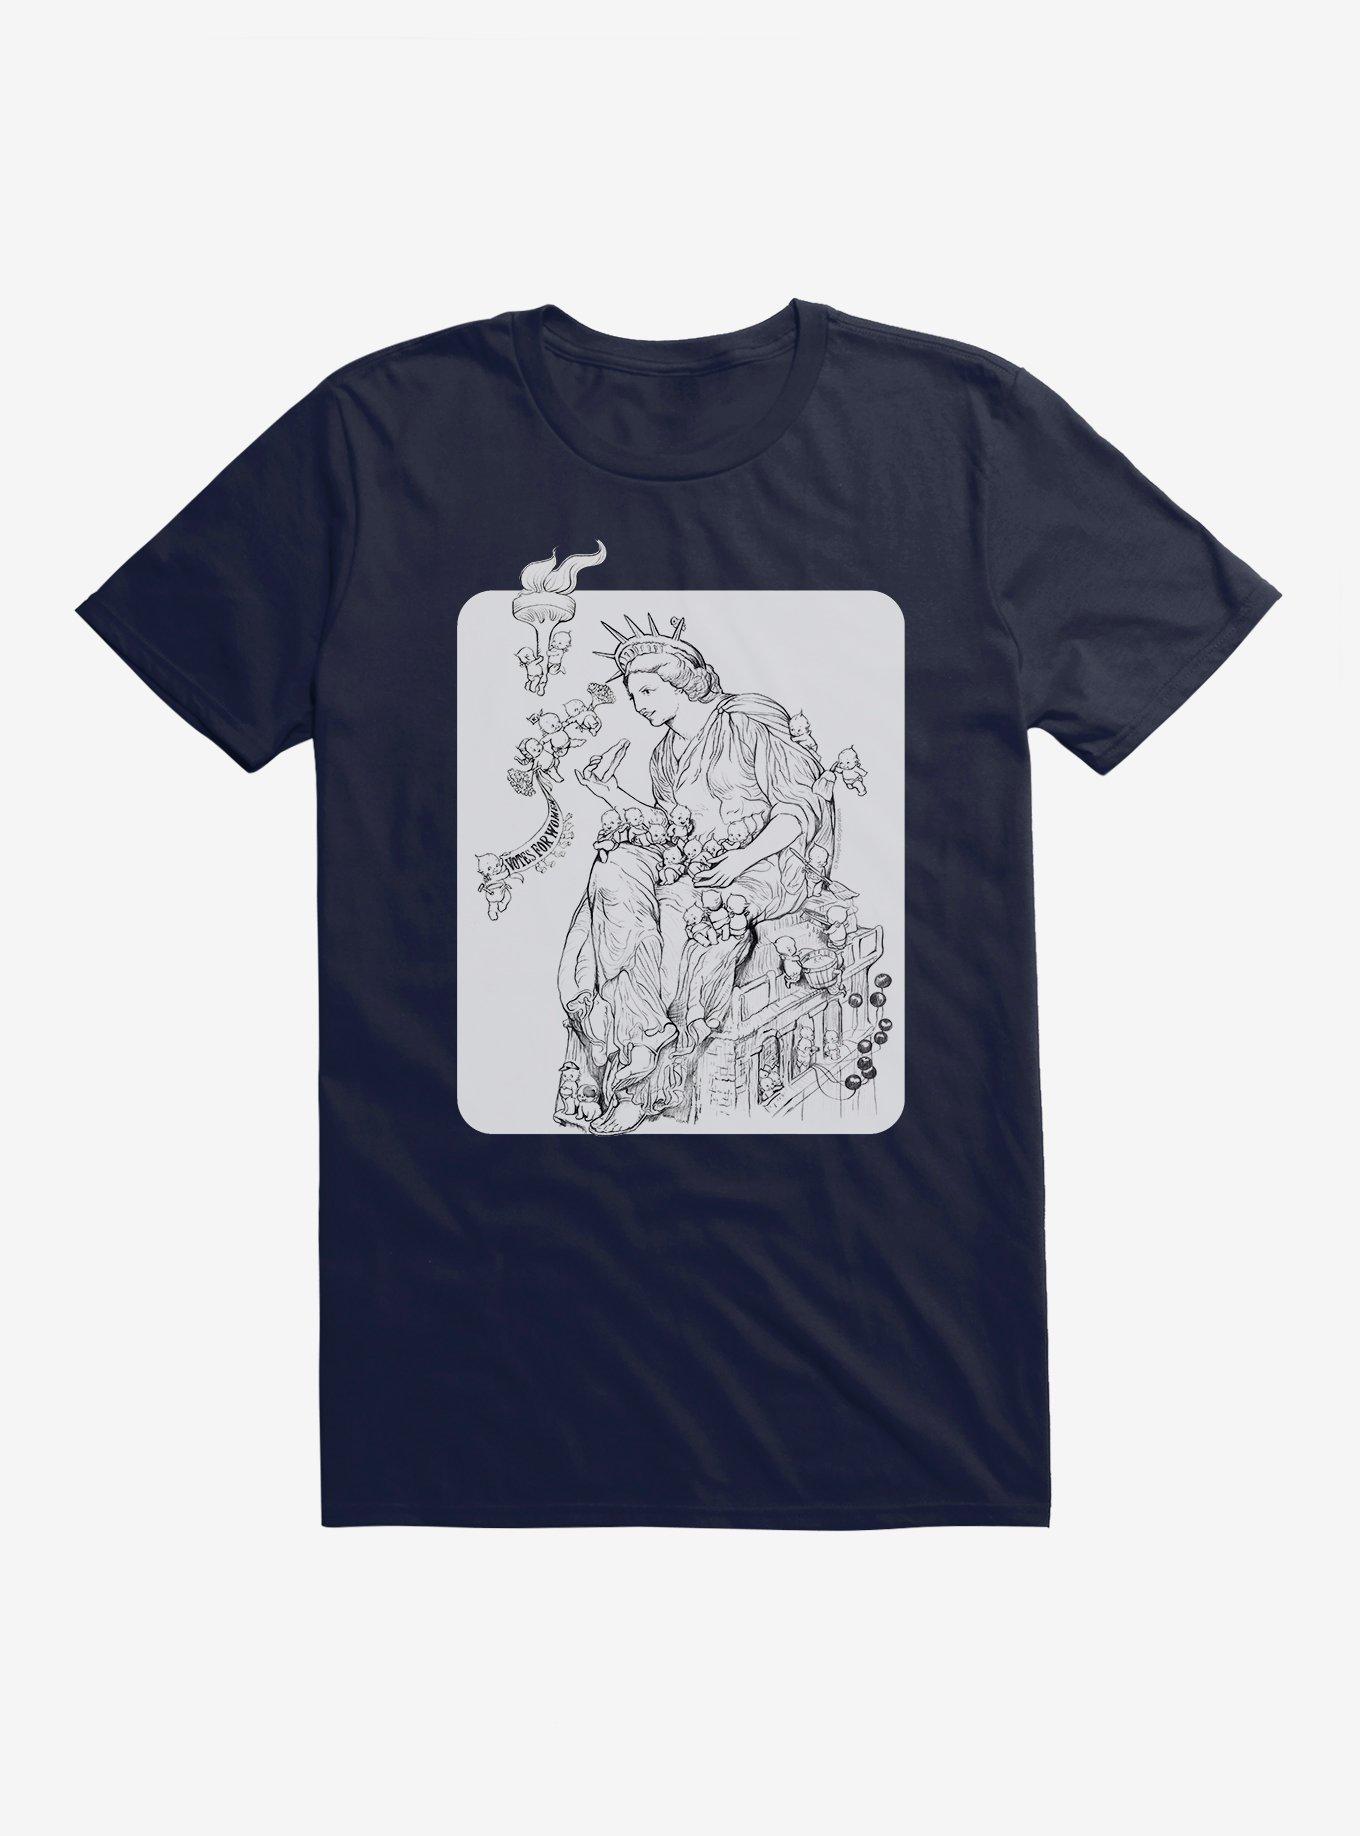 Kewpie Lady Liberty T-Shirt, NAVY, hi-res